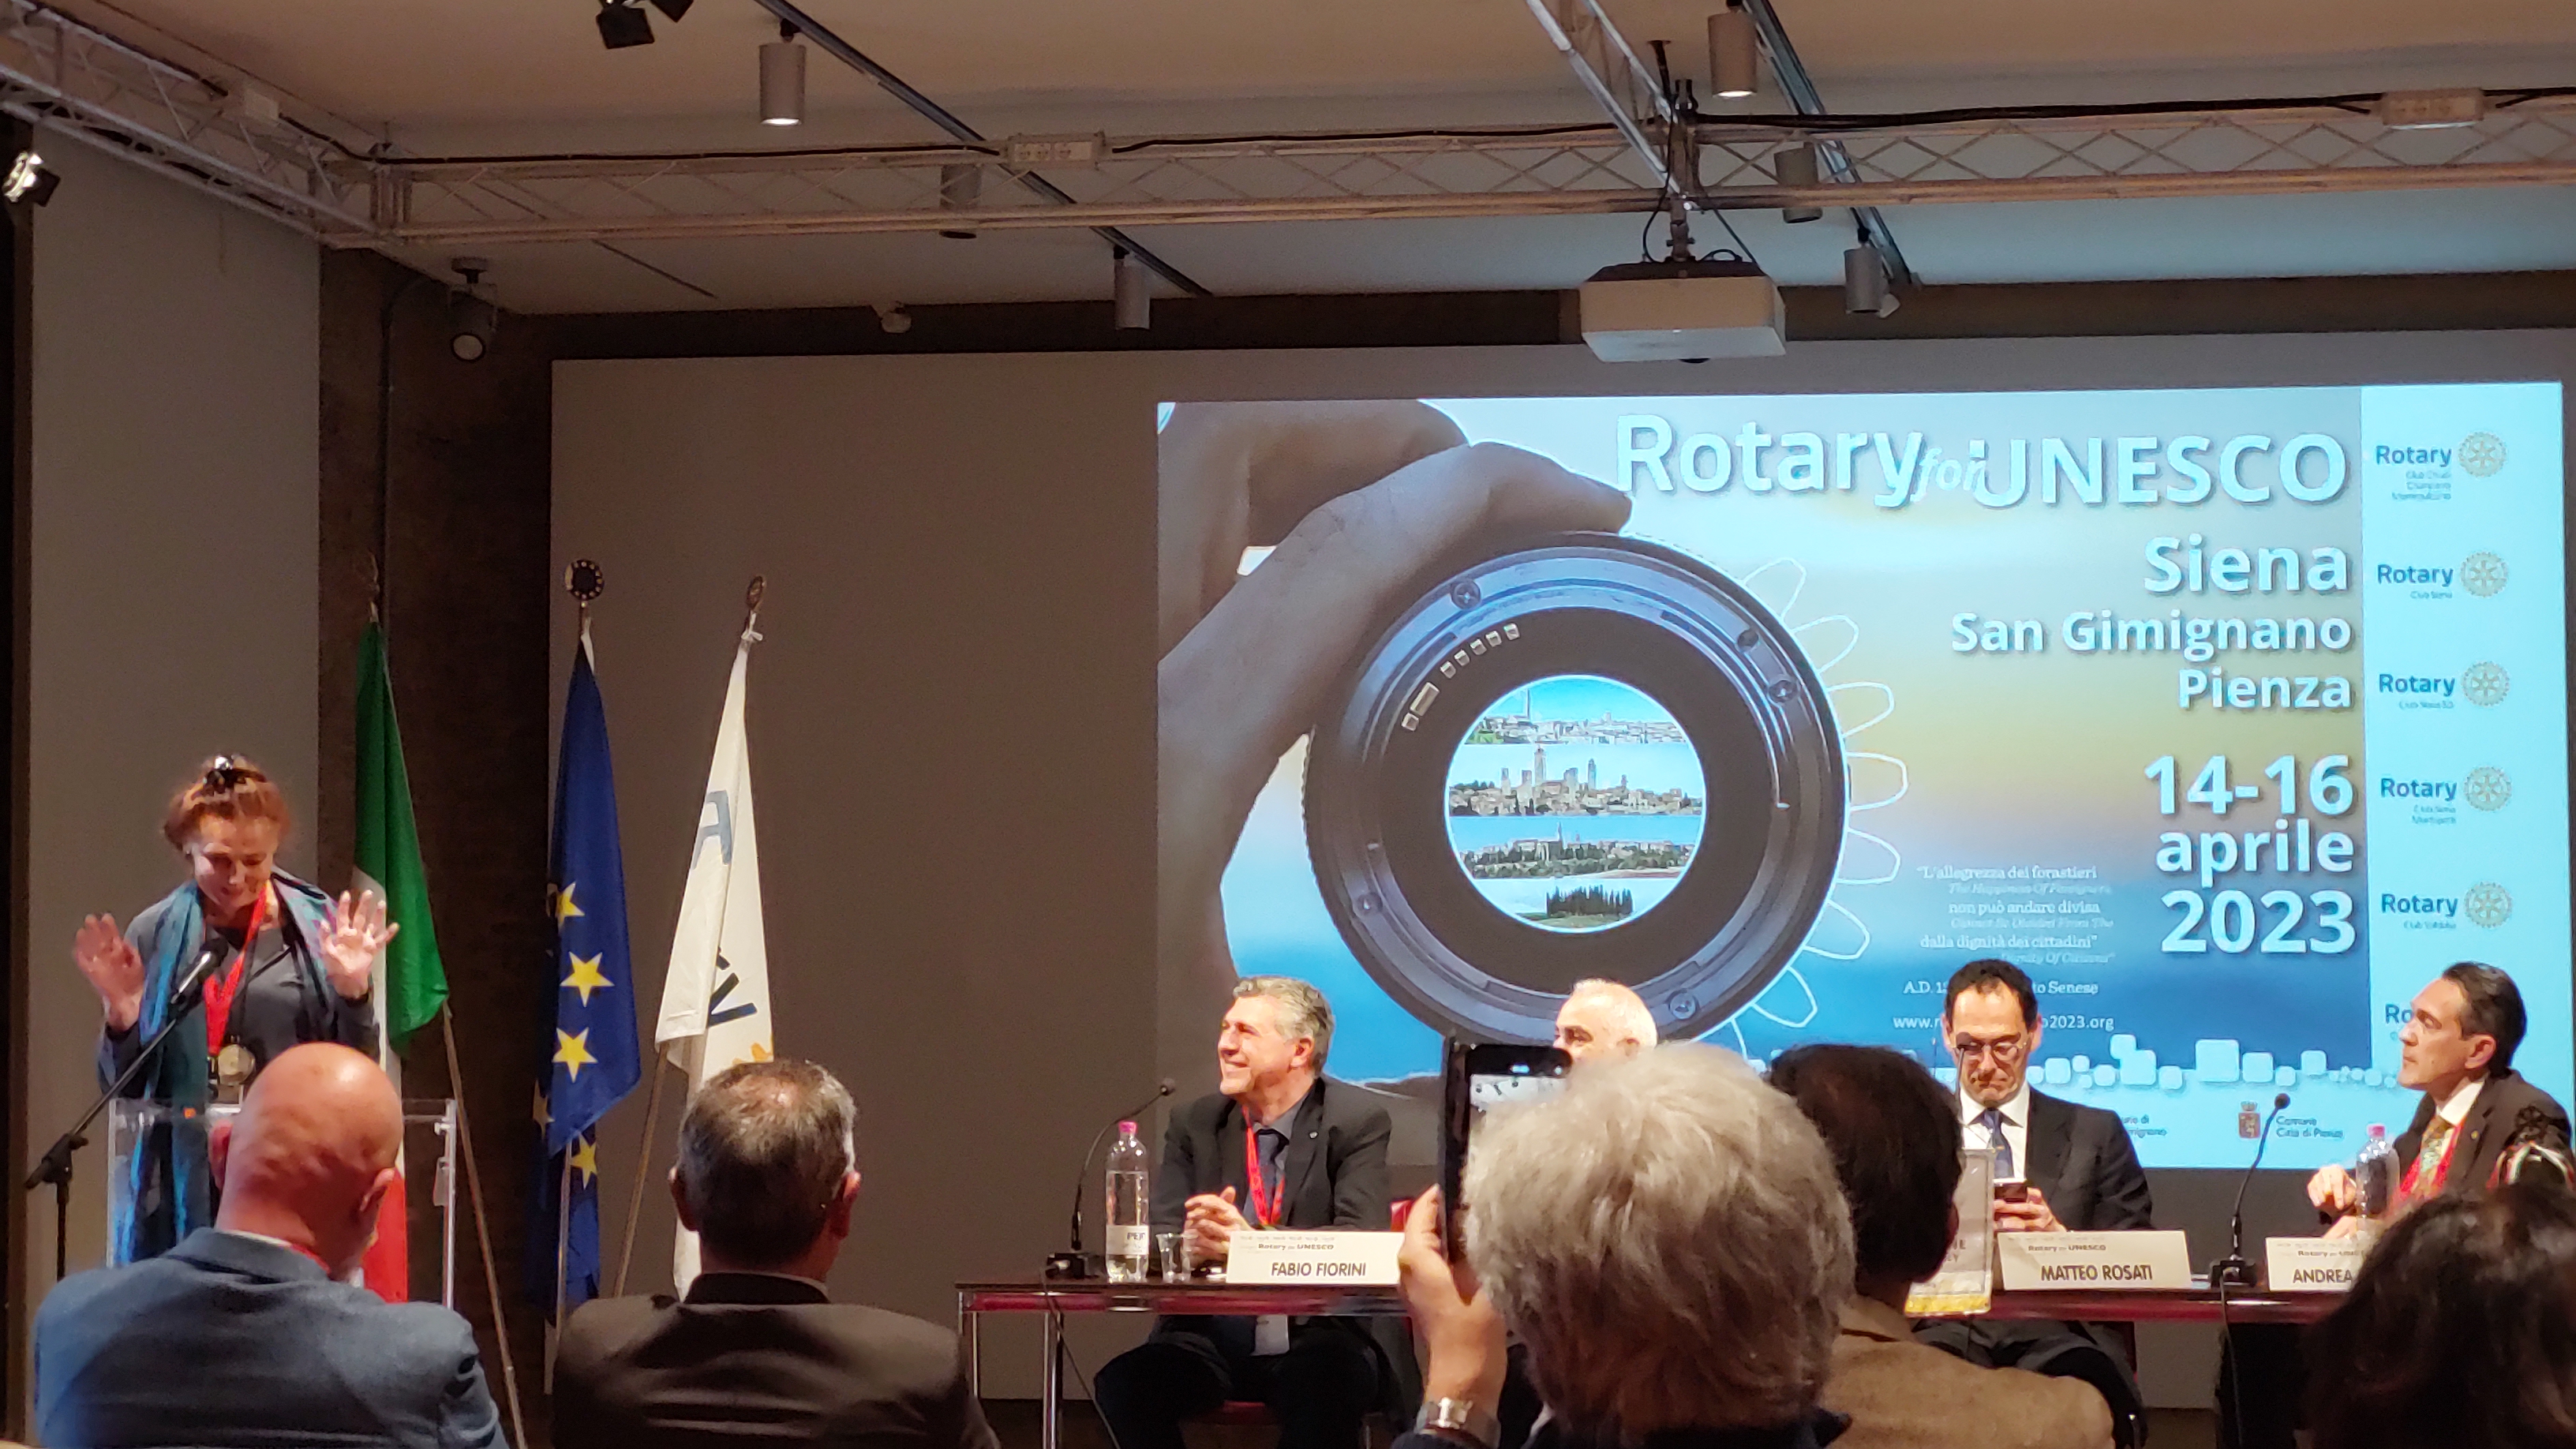 Rotary Unesco Siena 2023 rok (10)